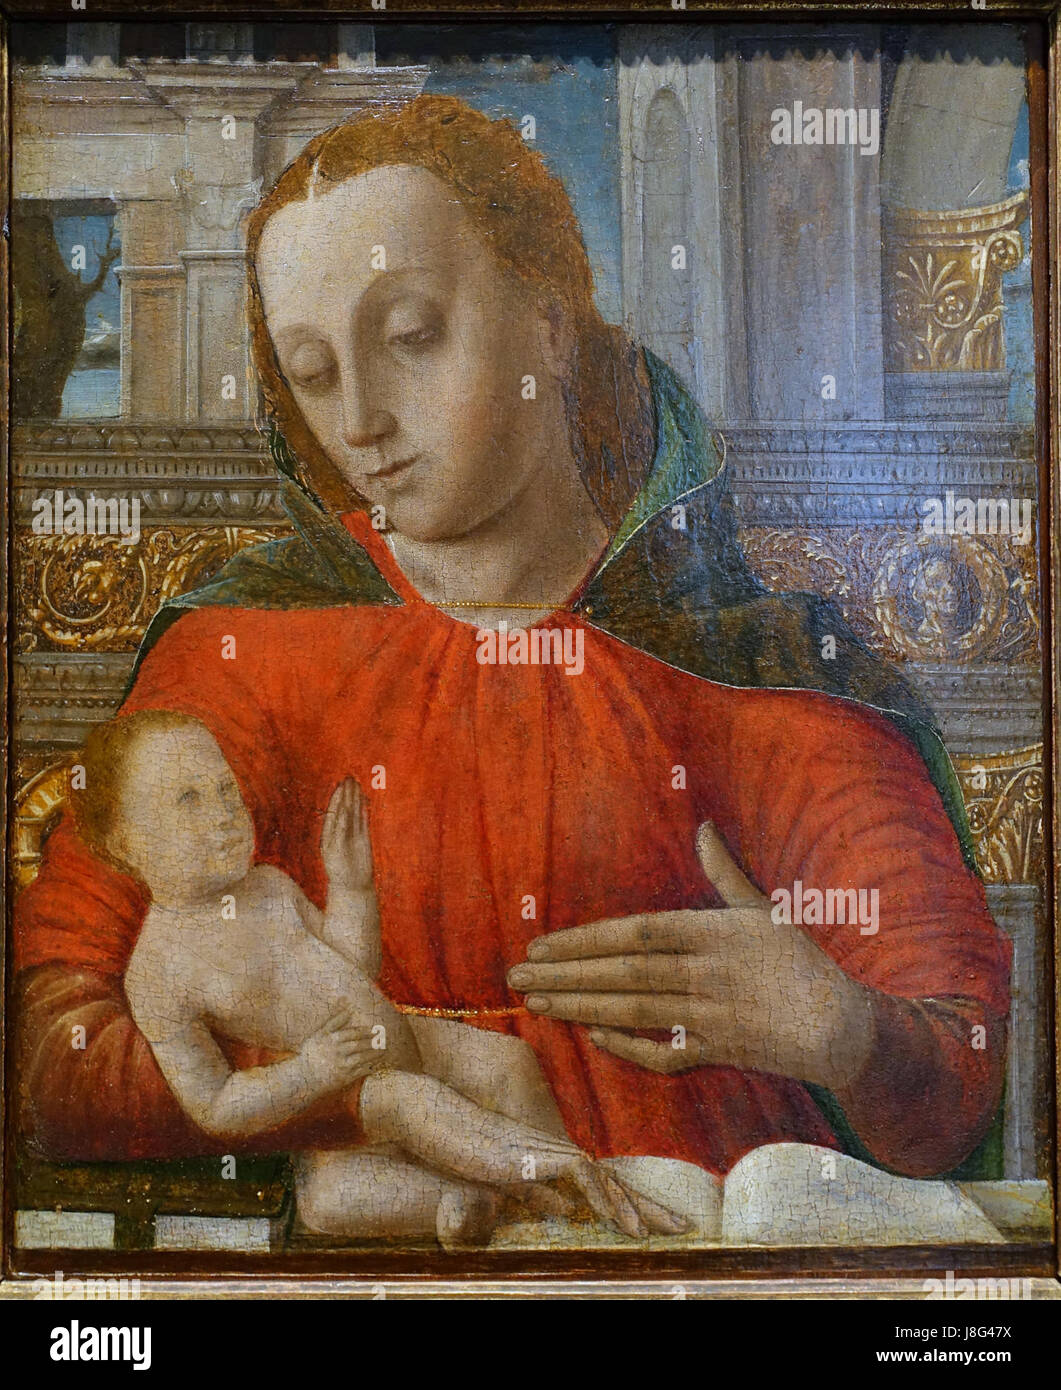 Madonna and Child, follower of Bartolomeo Suardi, called Bramantino, Milan, c. 1500, oil on panel   Blanton Museum of Art   Austin, Texas   DSC07721 Stock Photo